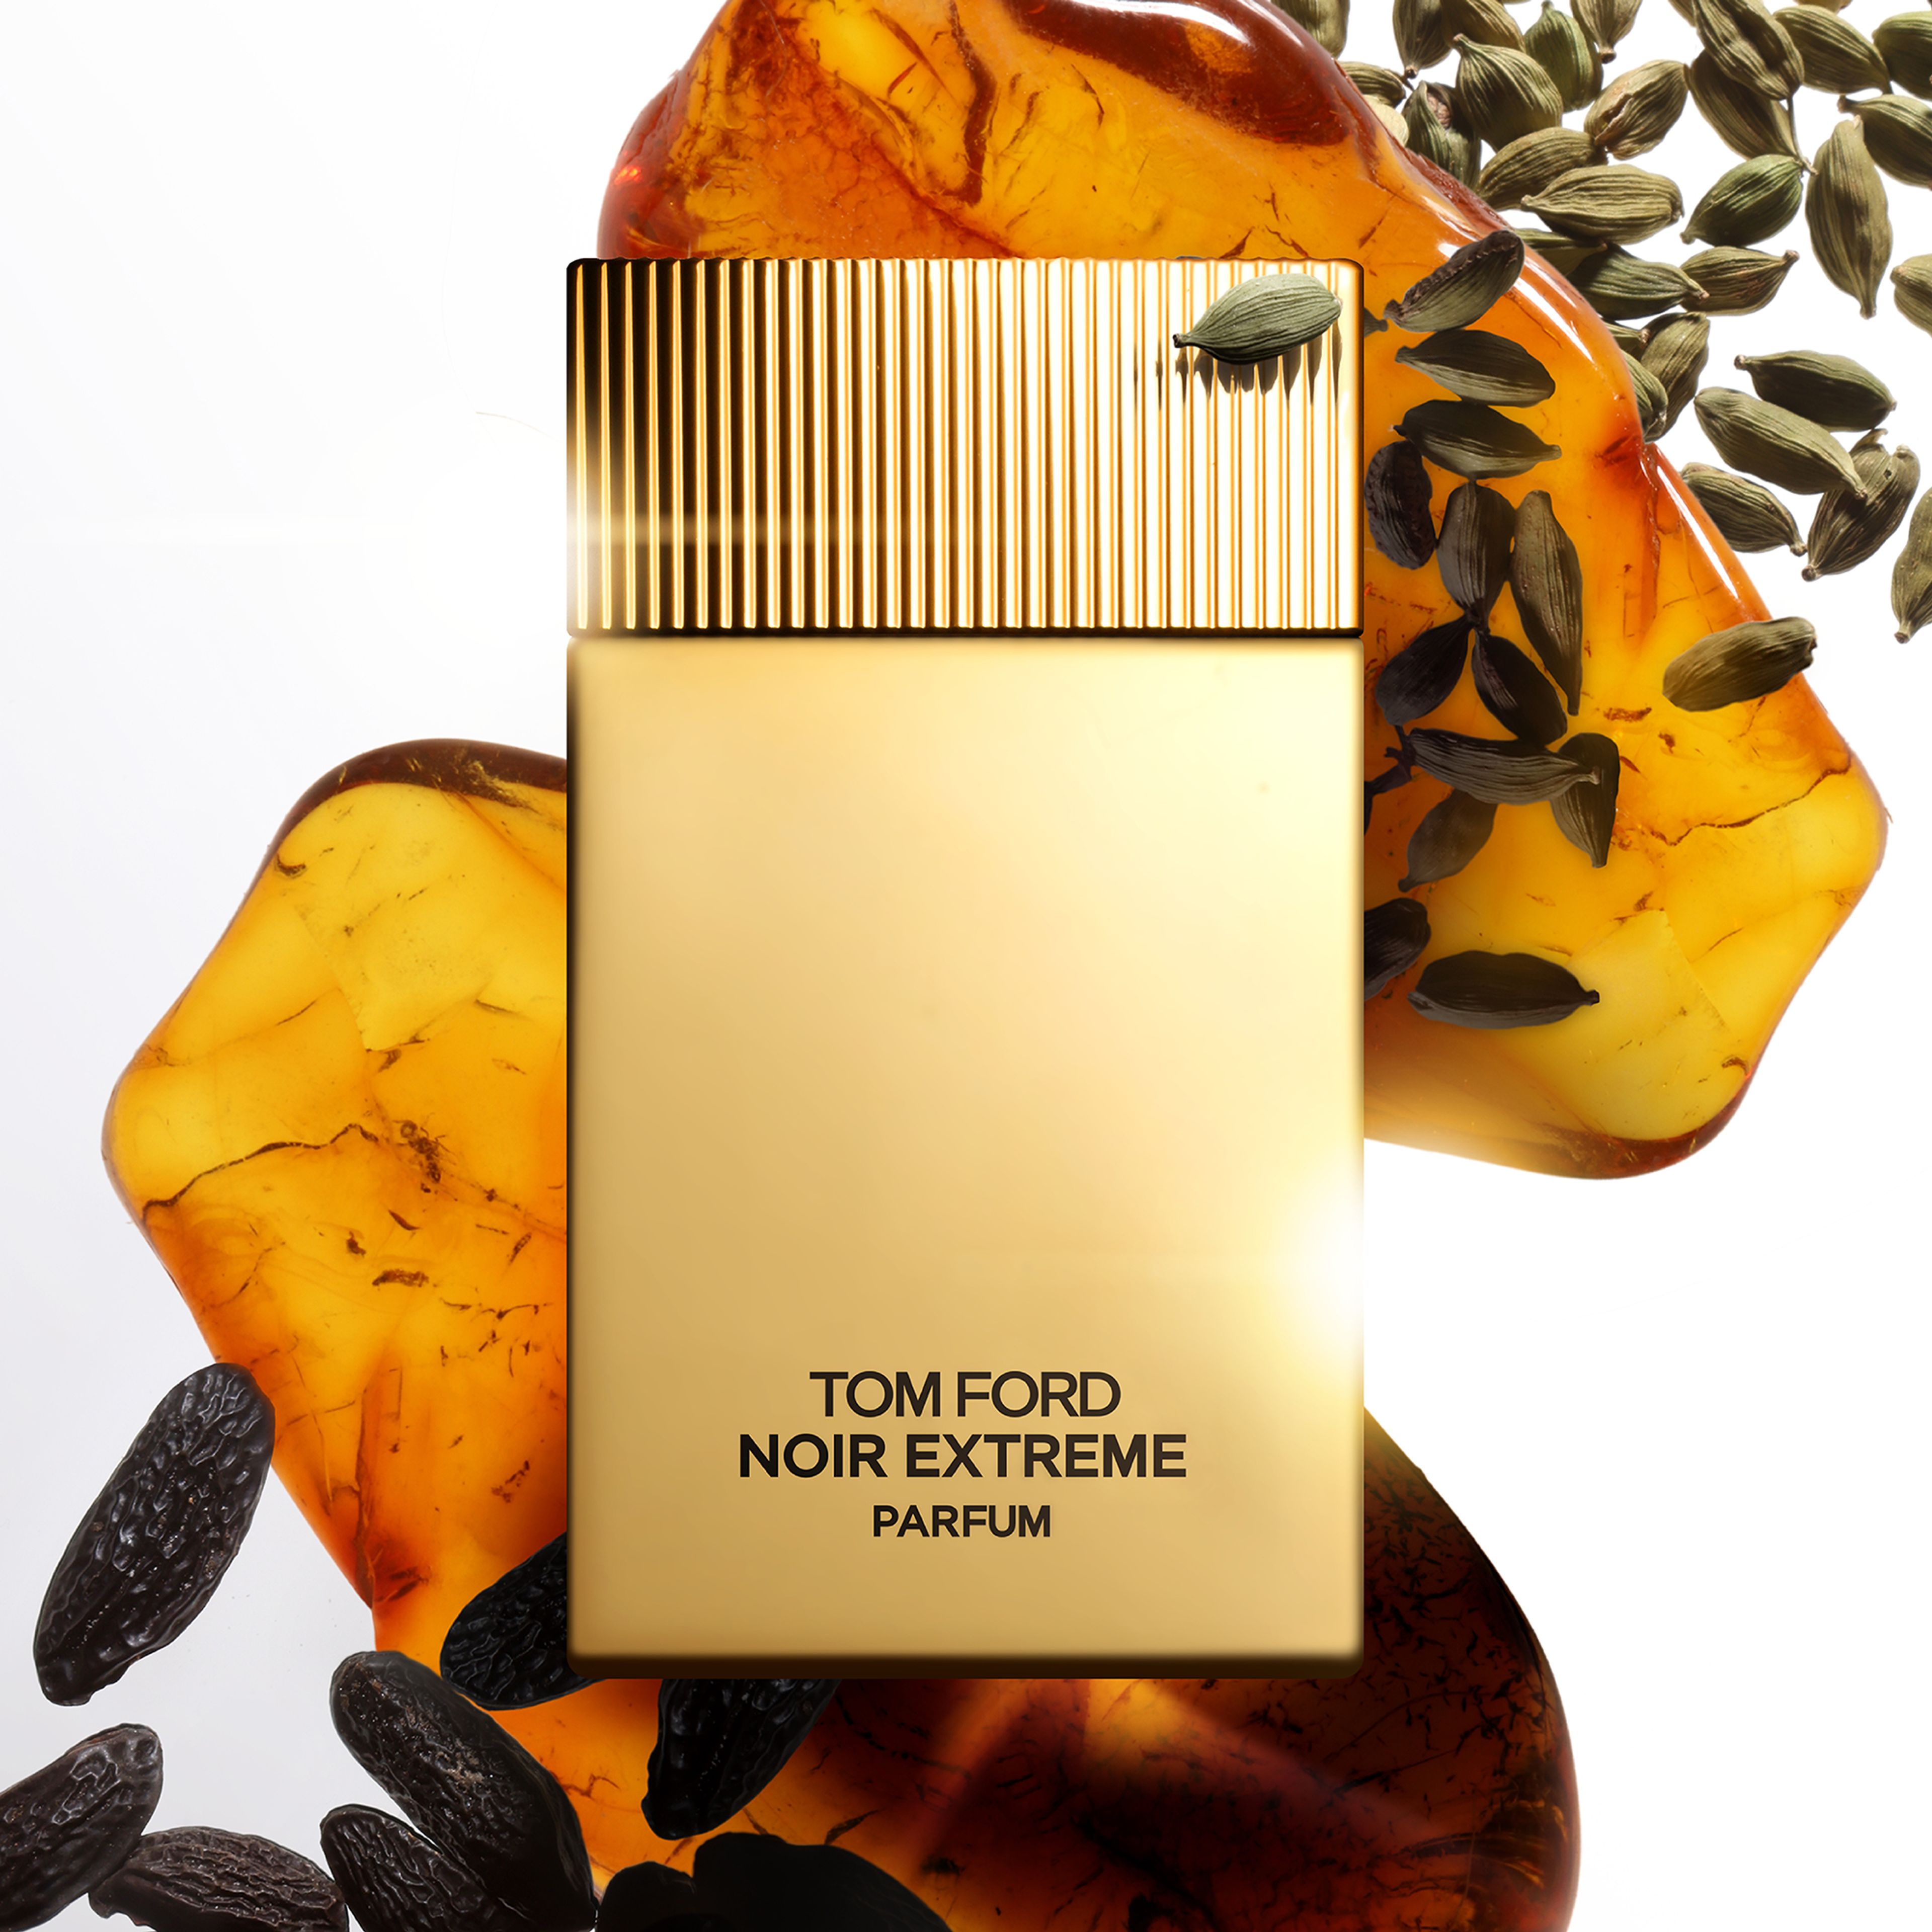 Tom Ford Noir Extreme Parfum 5